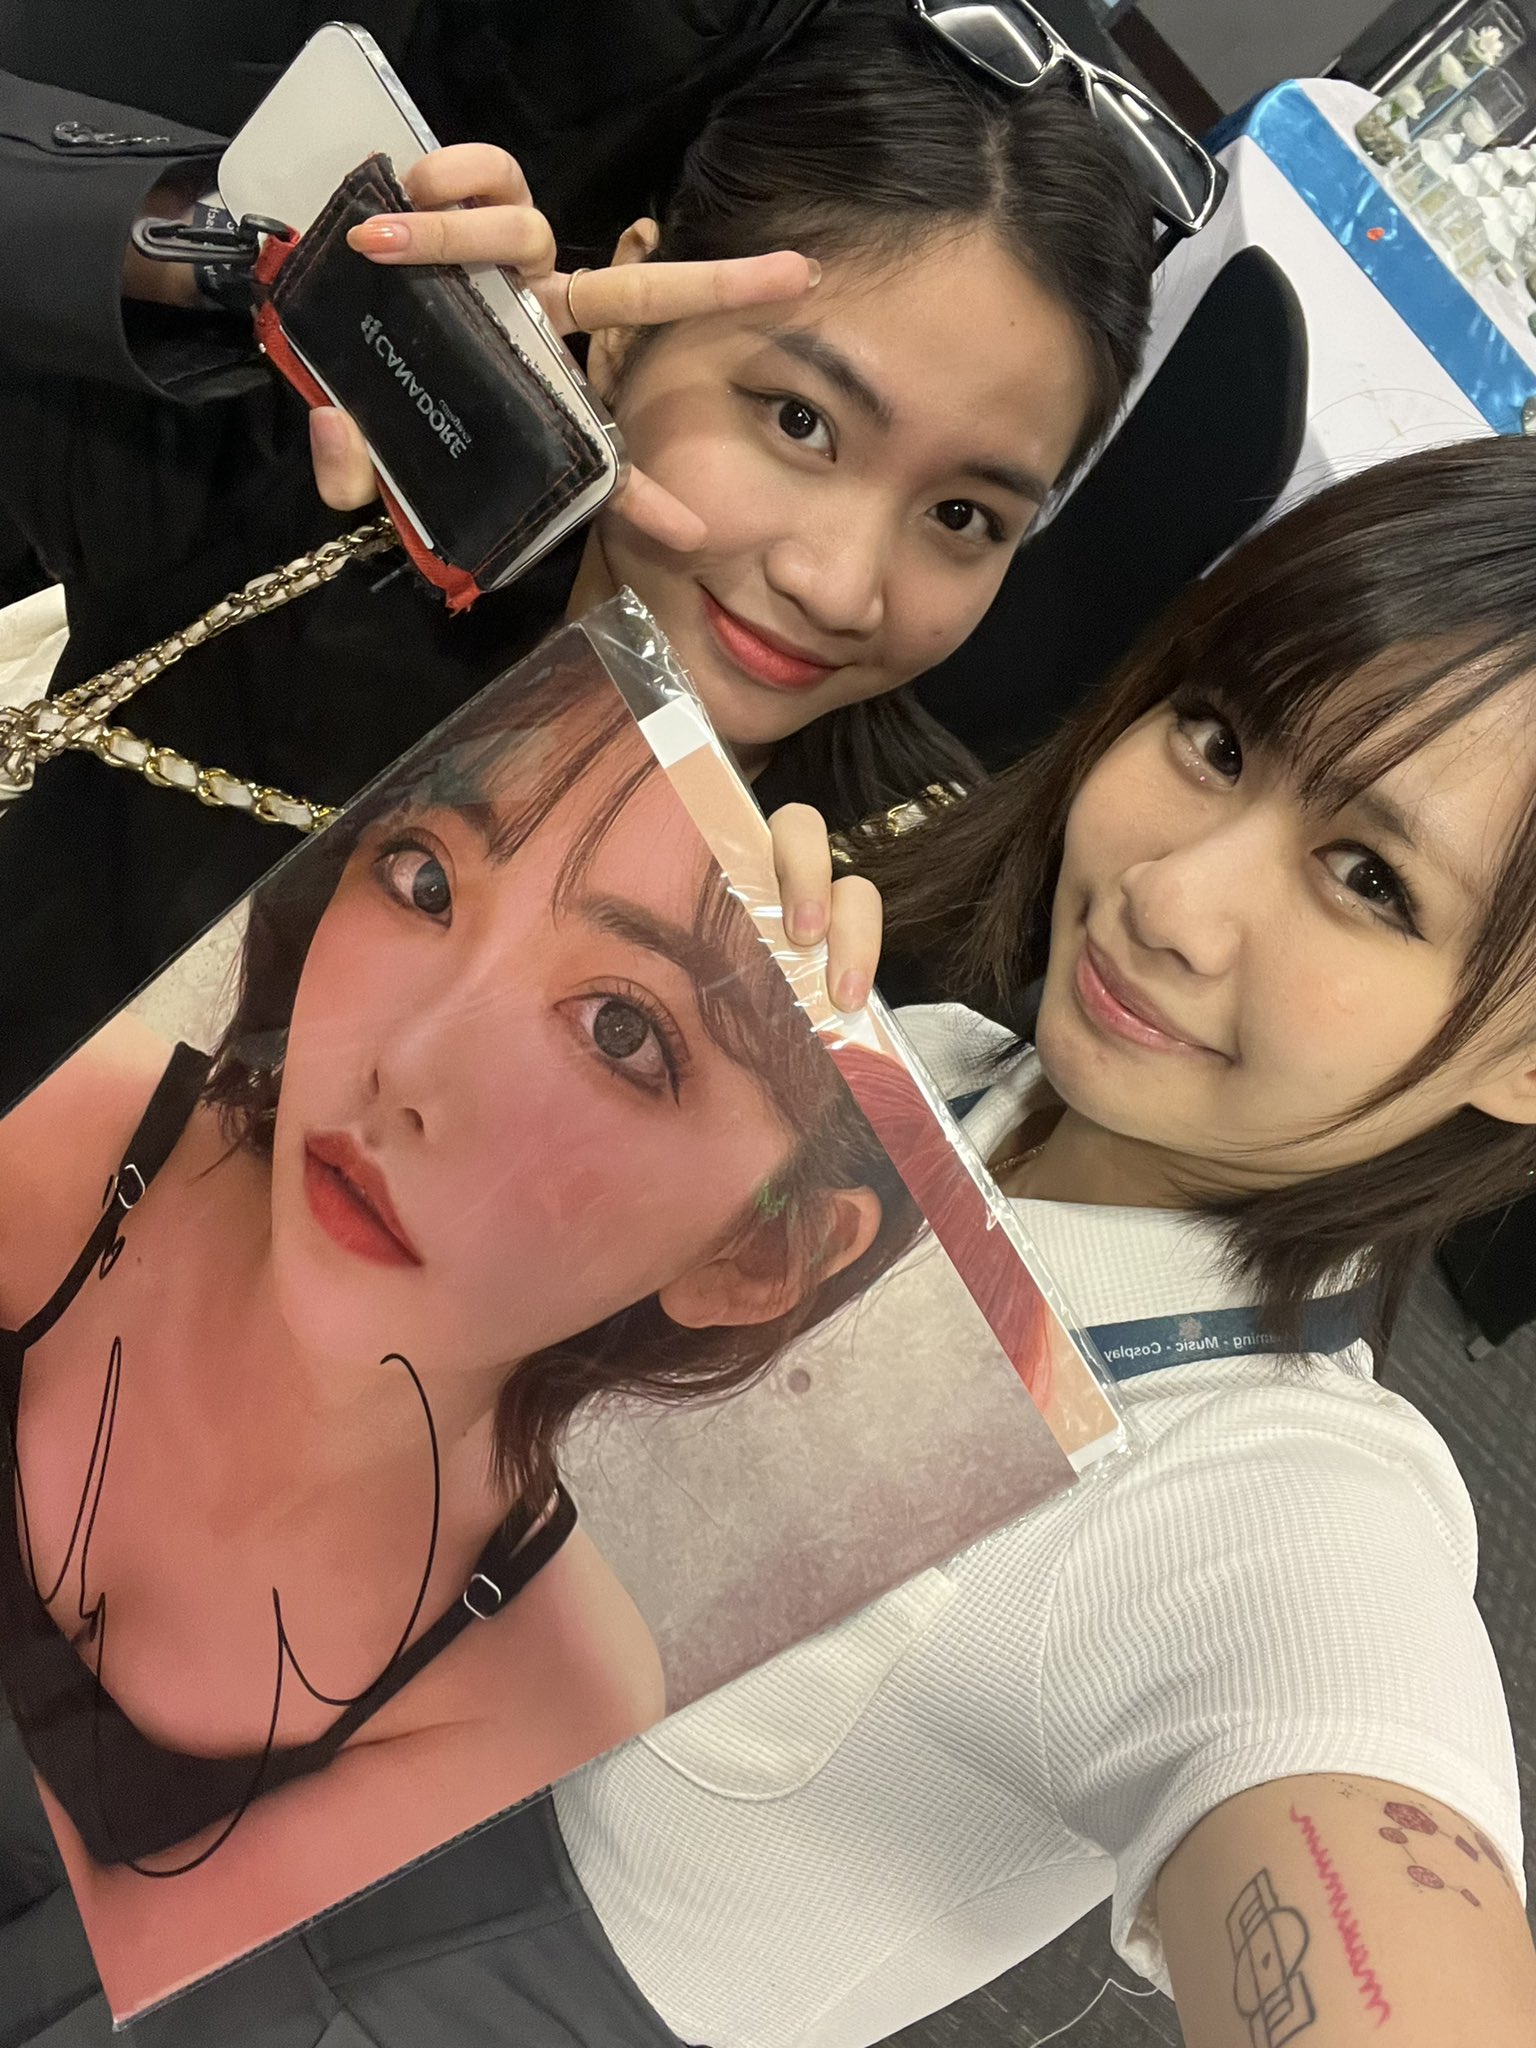 Face Reveal」 Kobo Kanaeru Cosplaying Eimi Fukada 